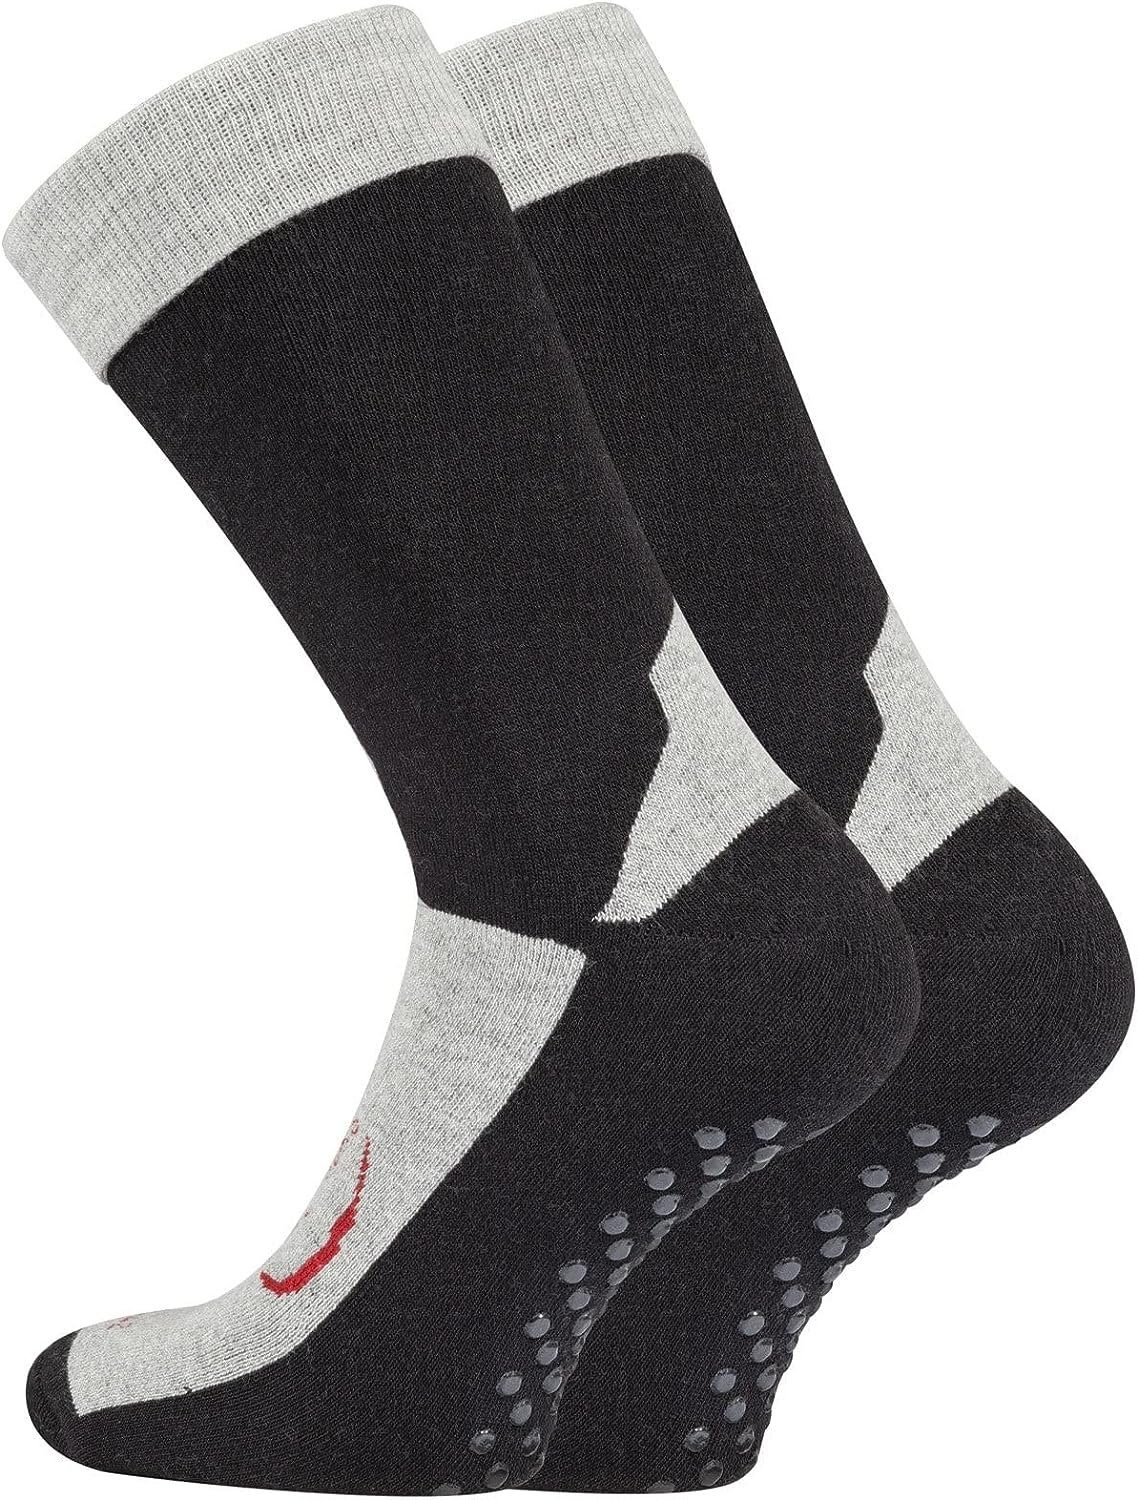 Vollkommen TippTexx 24 Haussocken Paar 2 ABS-Socken, Homesocks Anti-Rutsch-Socken Stopper-Socken